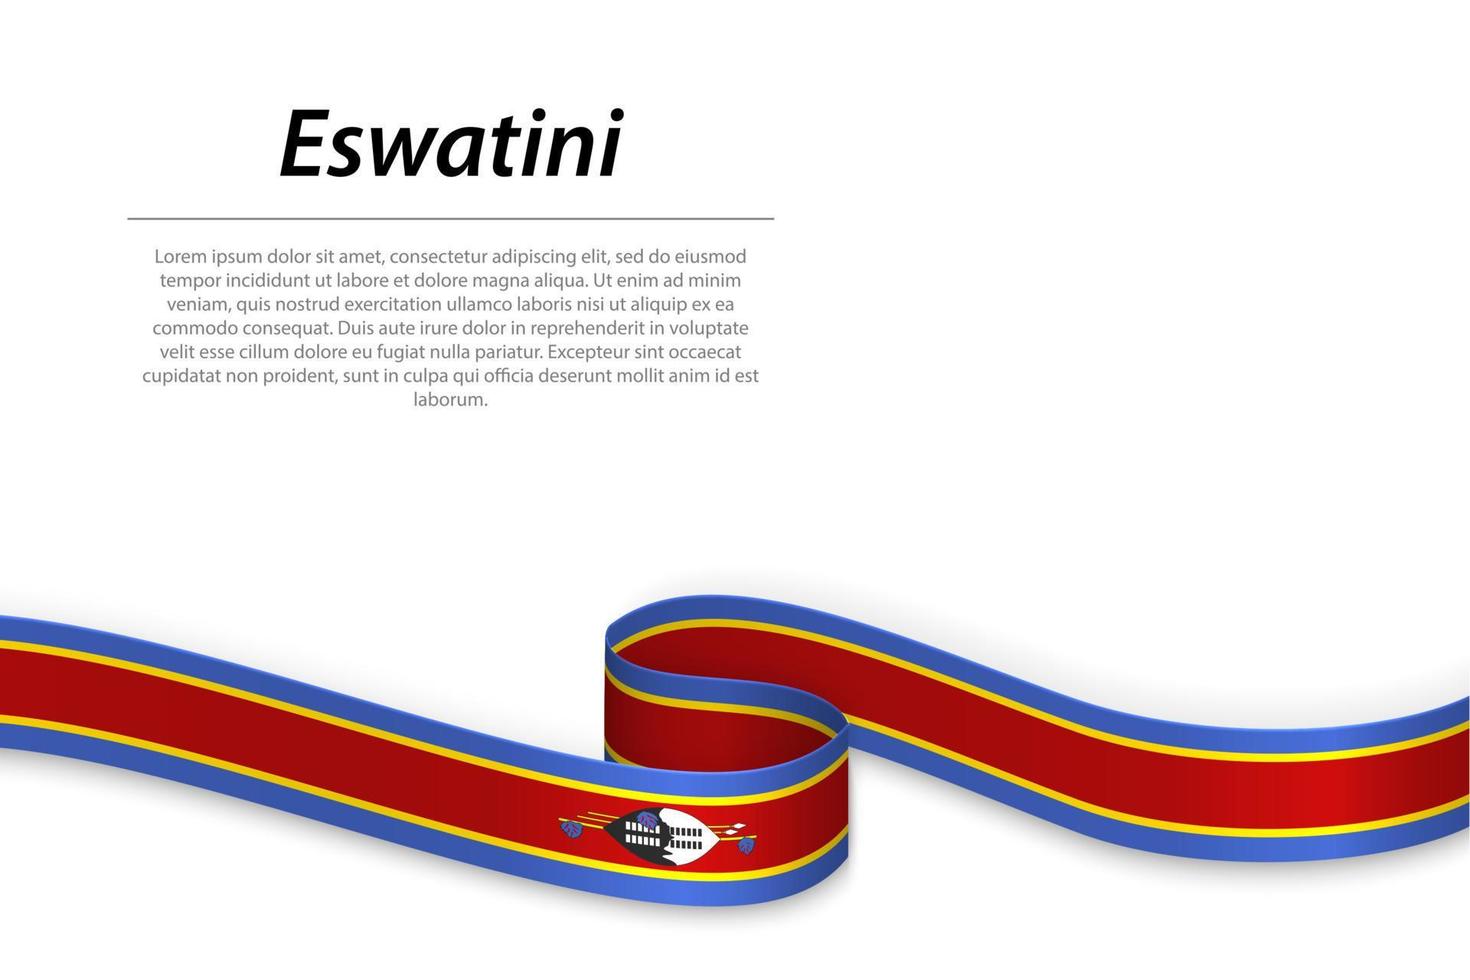 acenando a fita ou banner com bandeira da eswatini vetor